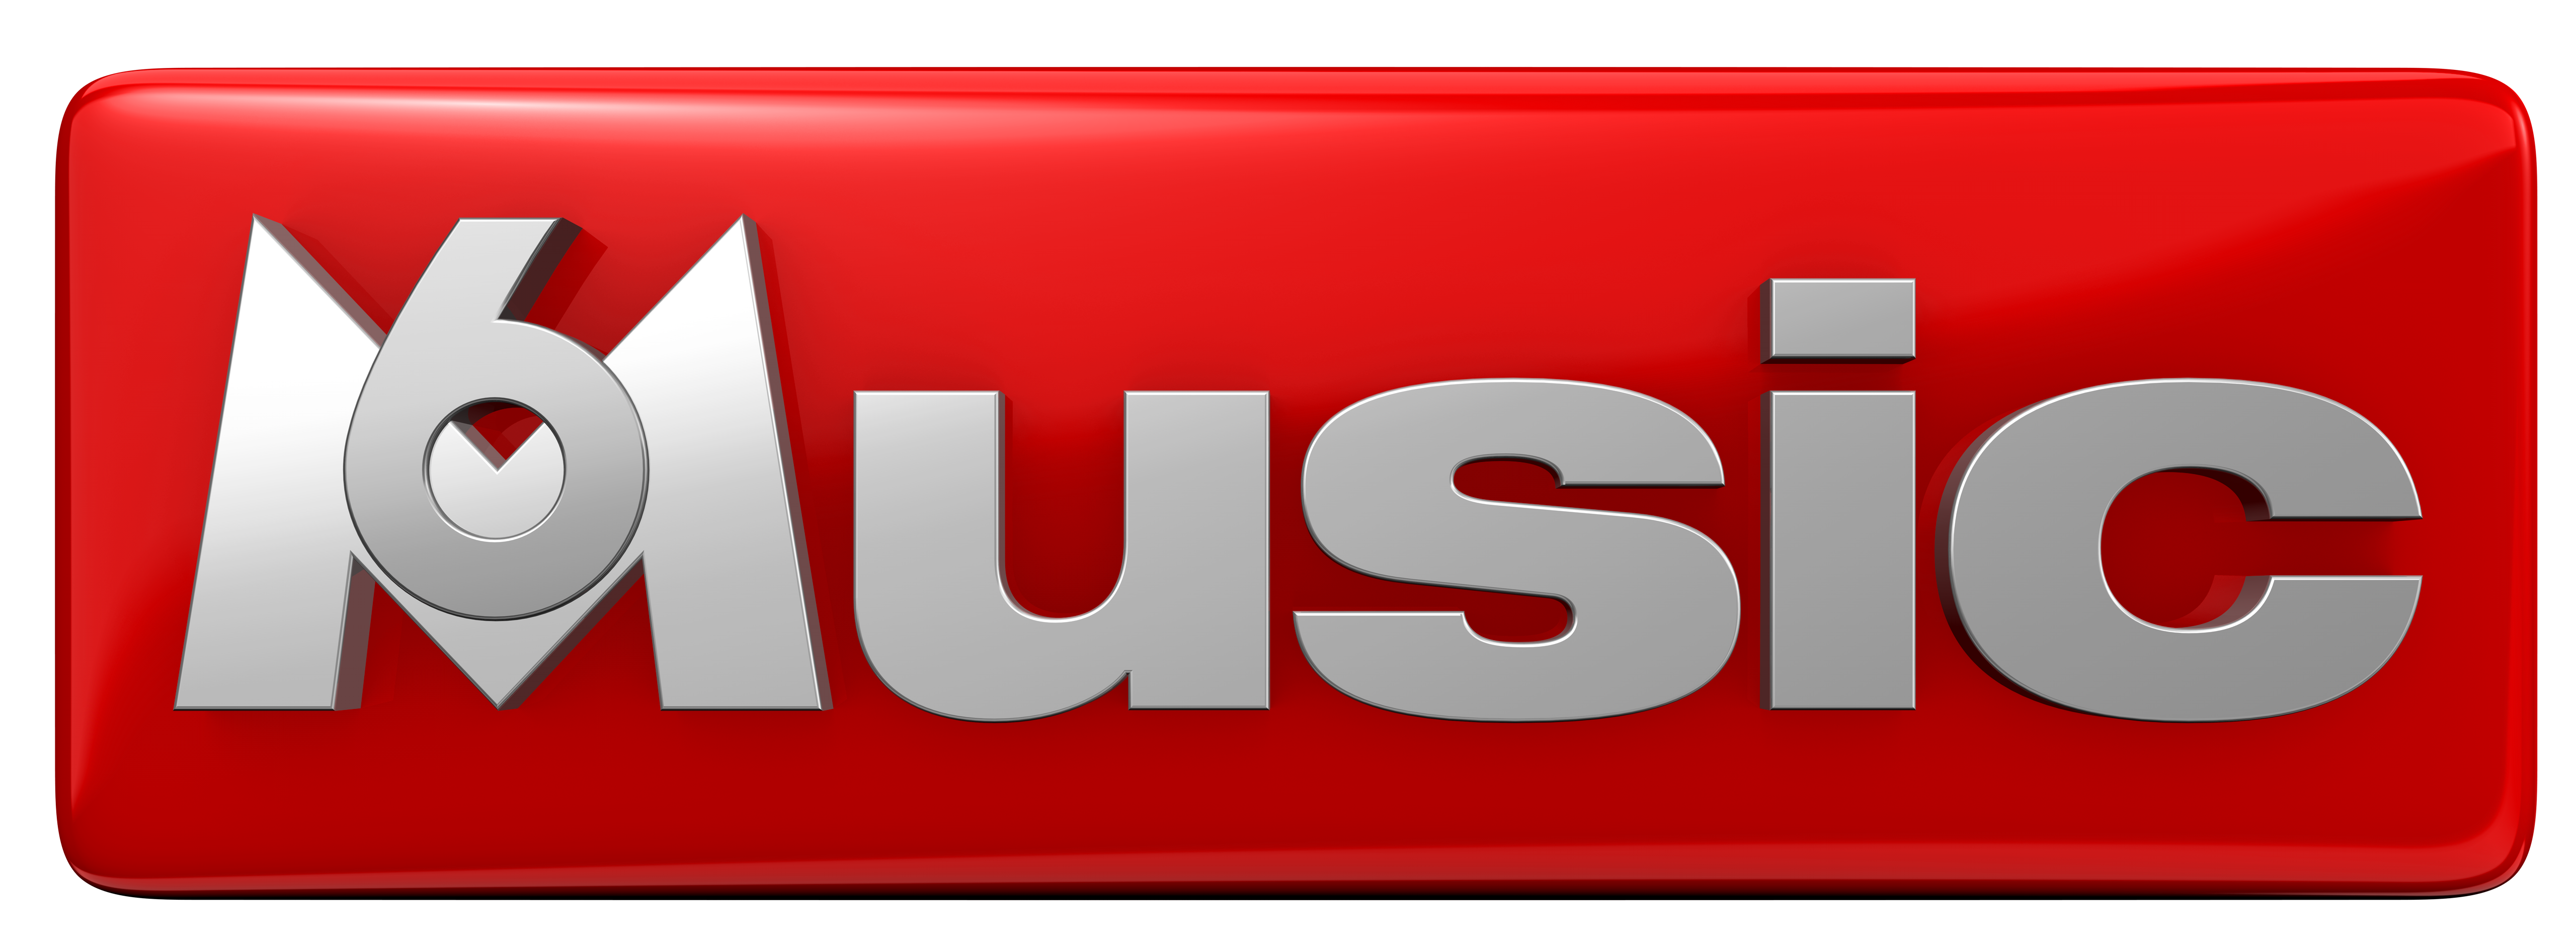 M6 Music. M6 (Телеканал). Логотипы музыкальных каналов. M6 (Телеканал) logo.